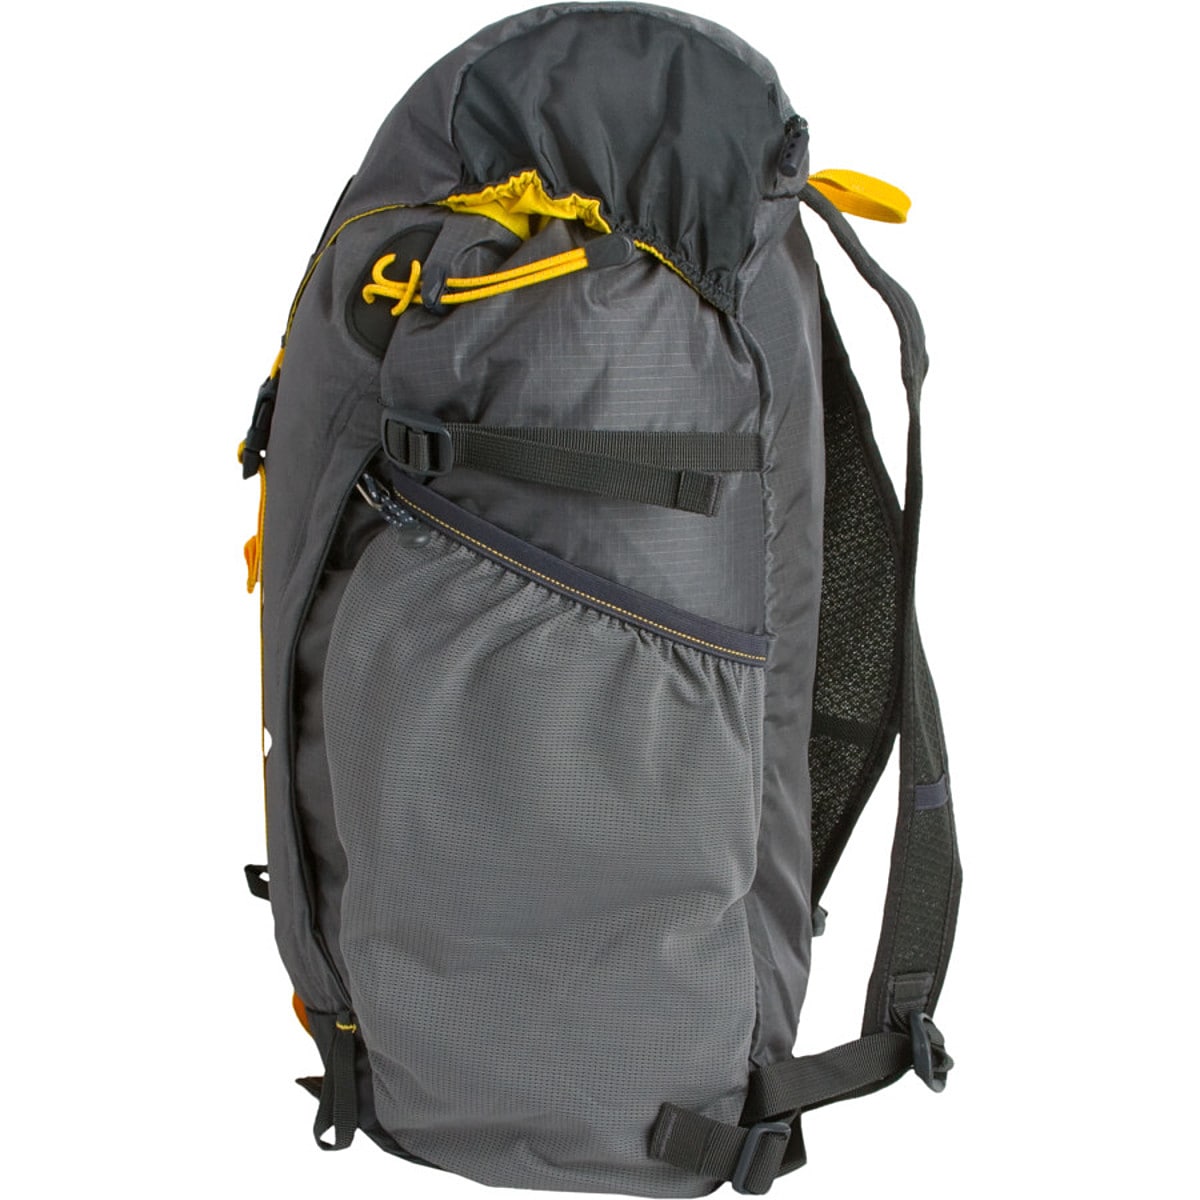 Mountainsmith Scream 25 Mountainlight Backpack - 1465cu in | eBay